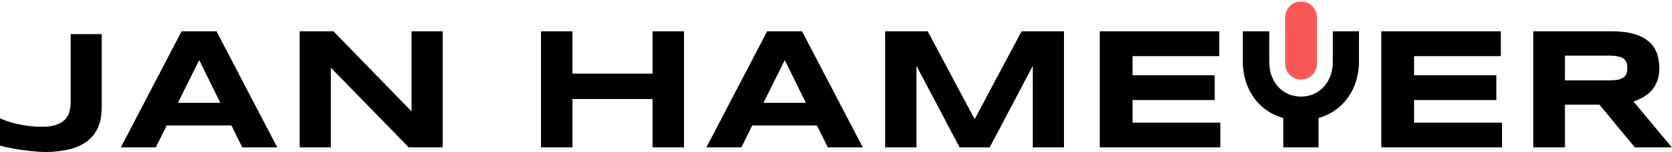 Jan Hameyer - Profisprecher Logo